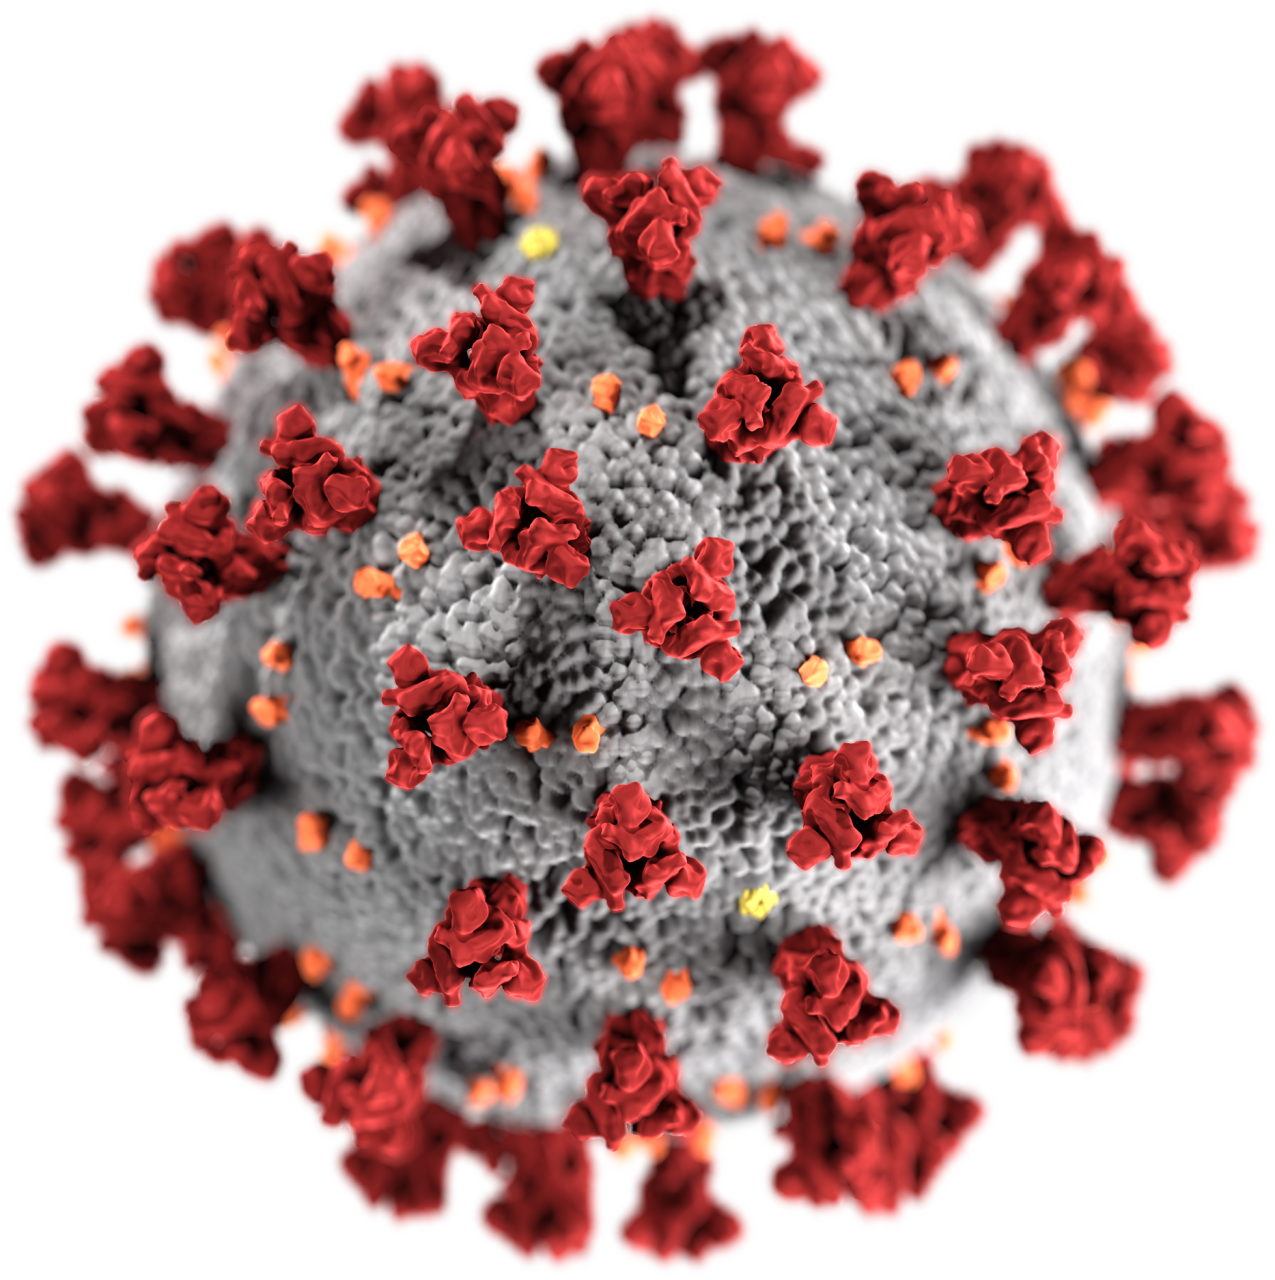 COVID Virus